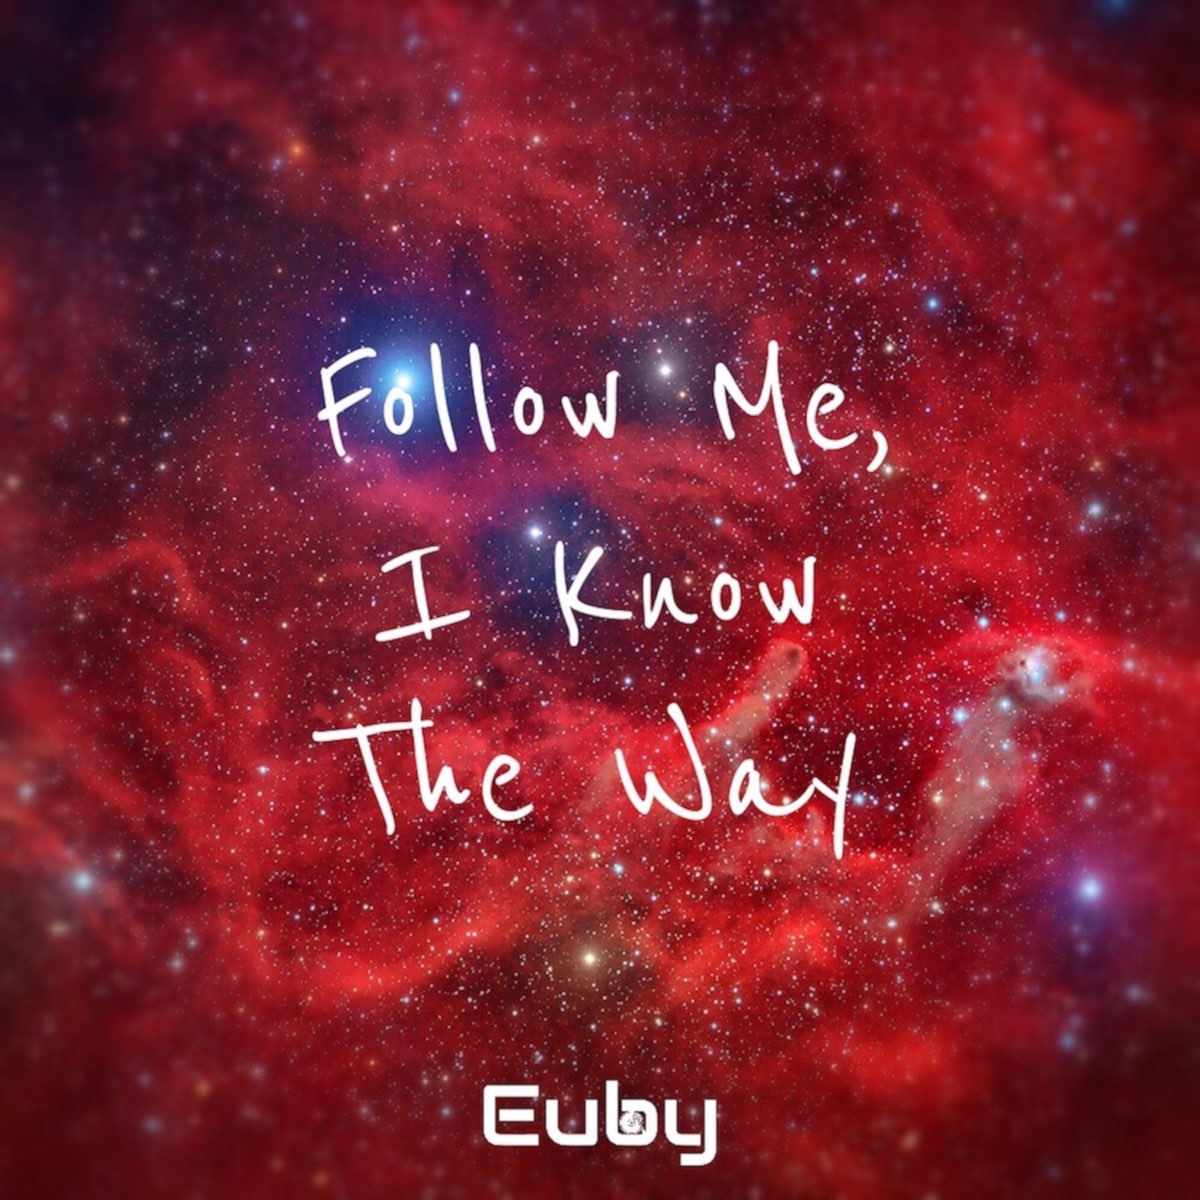 Follow Me, I Know the Way - EP của Euby trên Apple Music